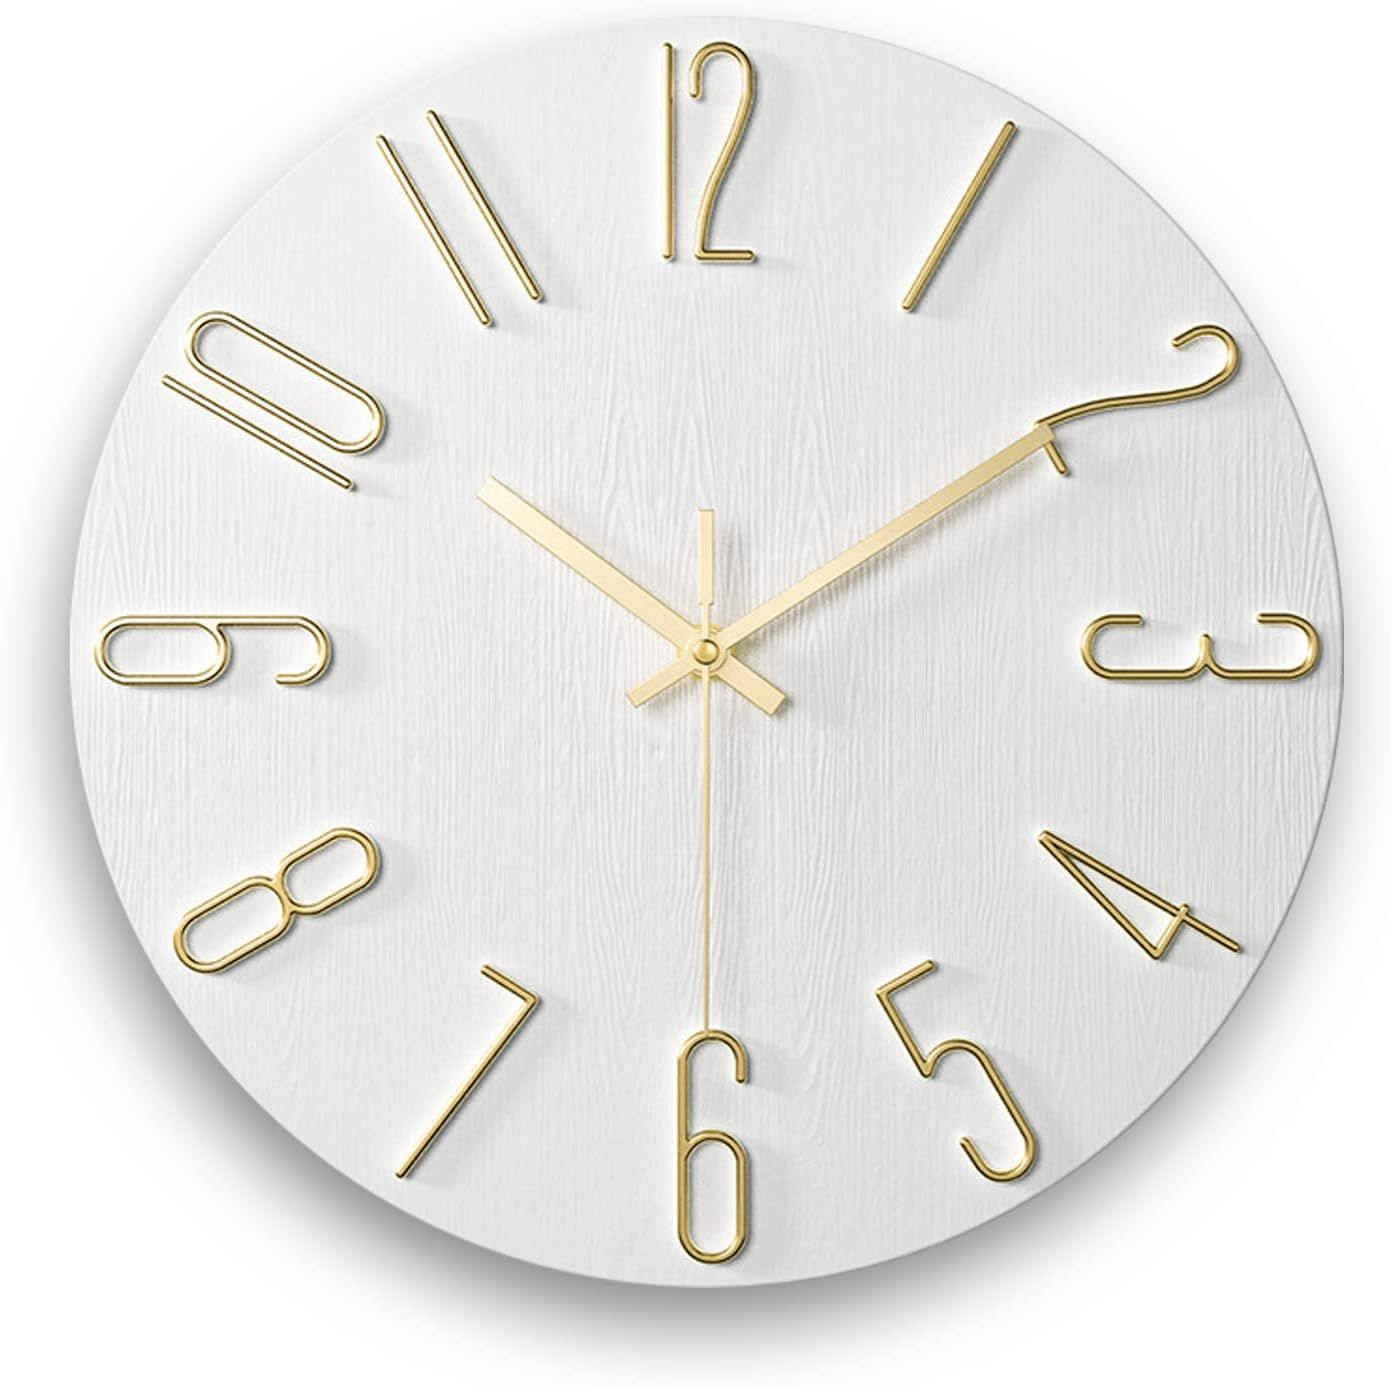 12 Inch Wall Clock Silent Non Ticking, Preciser Modern Style Decor Clock for Home, Office, School... | Amazon (US)